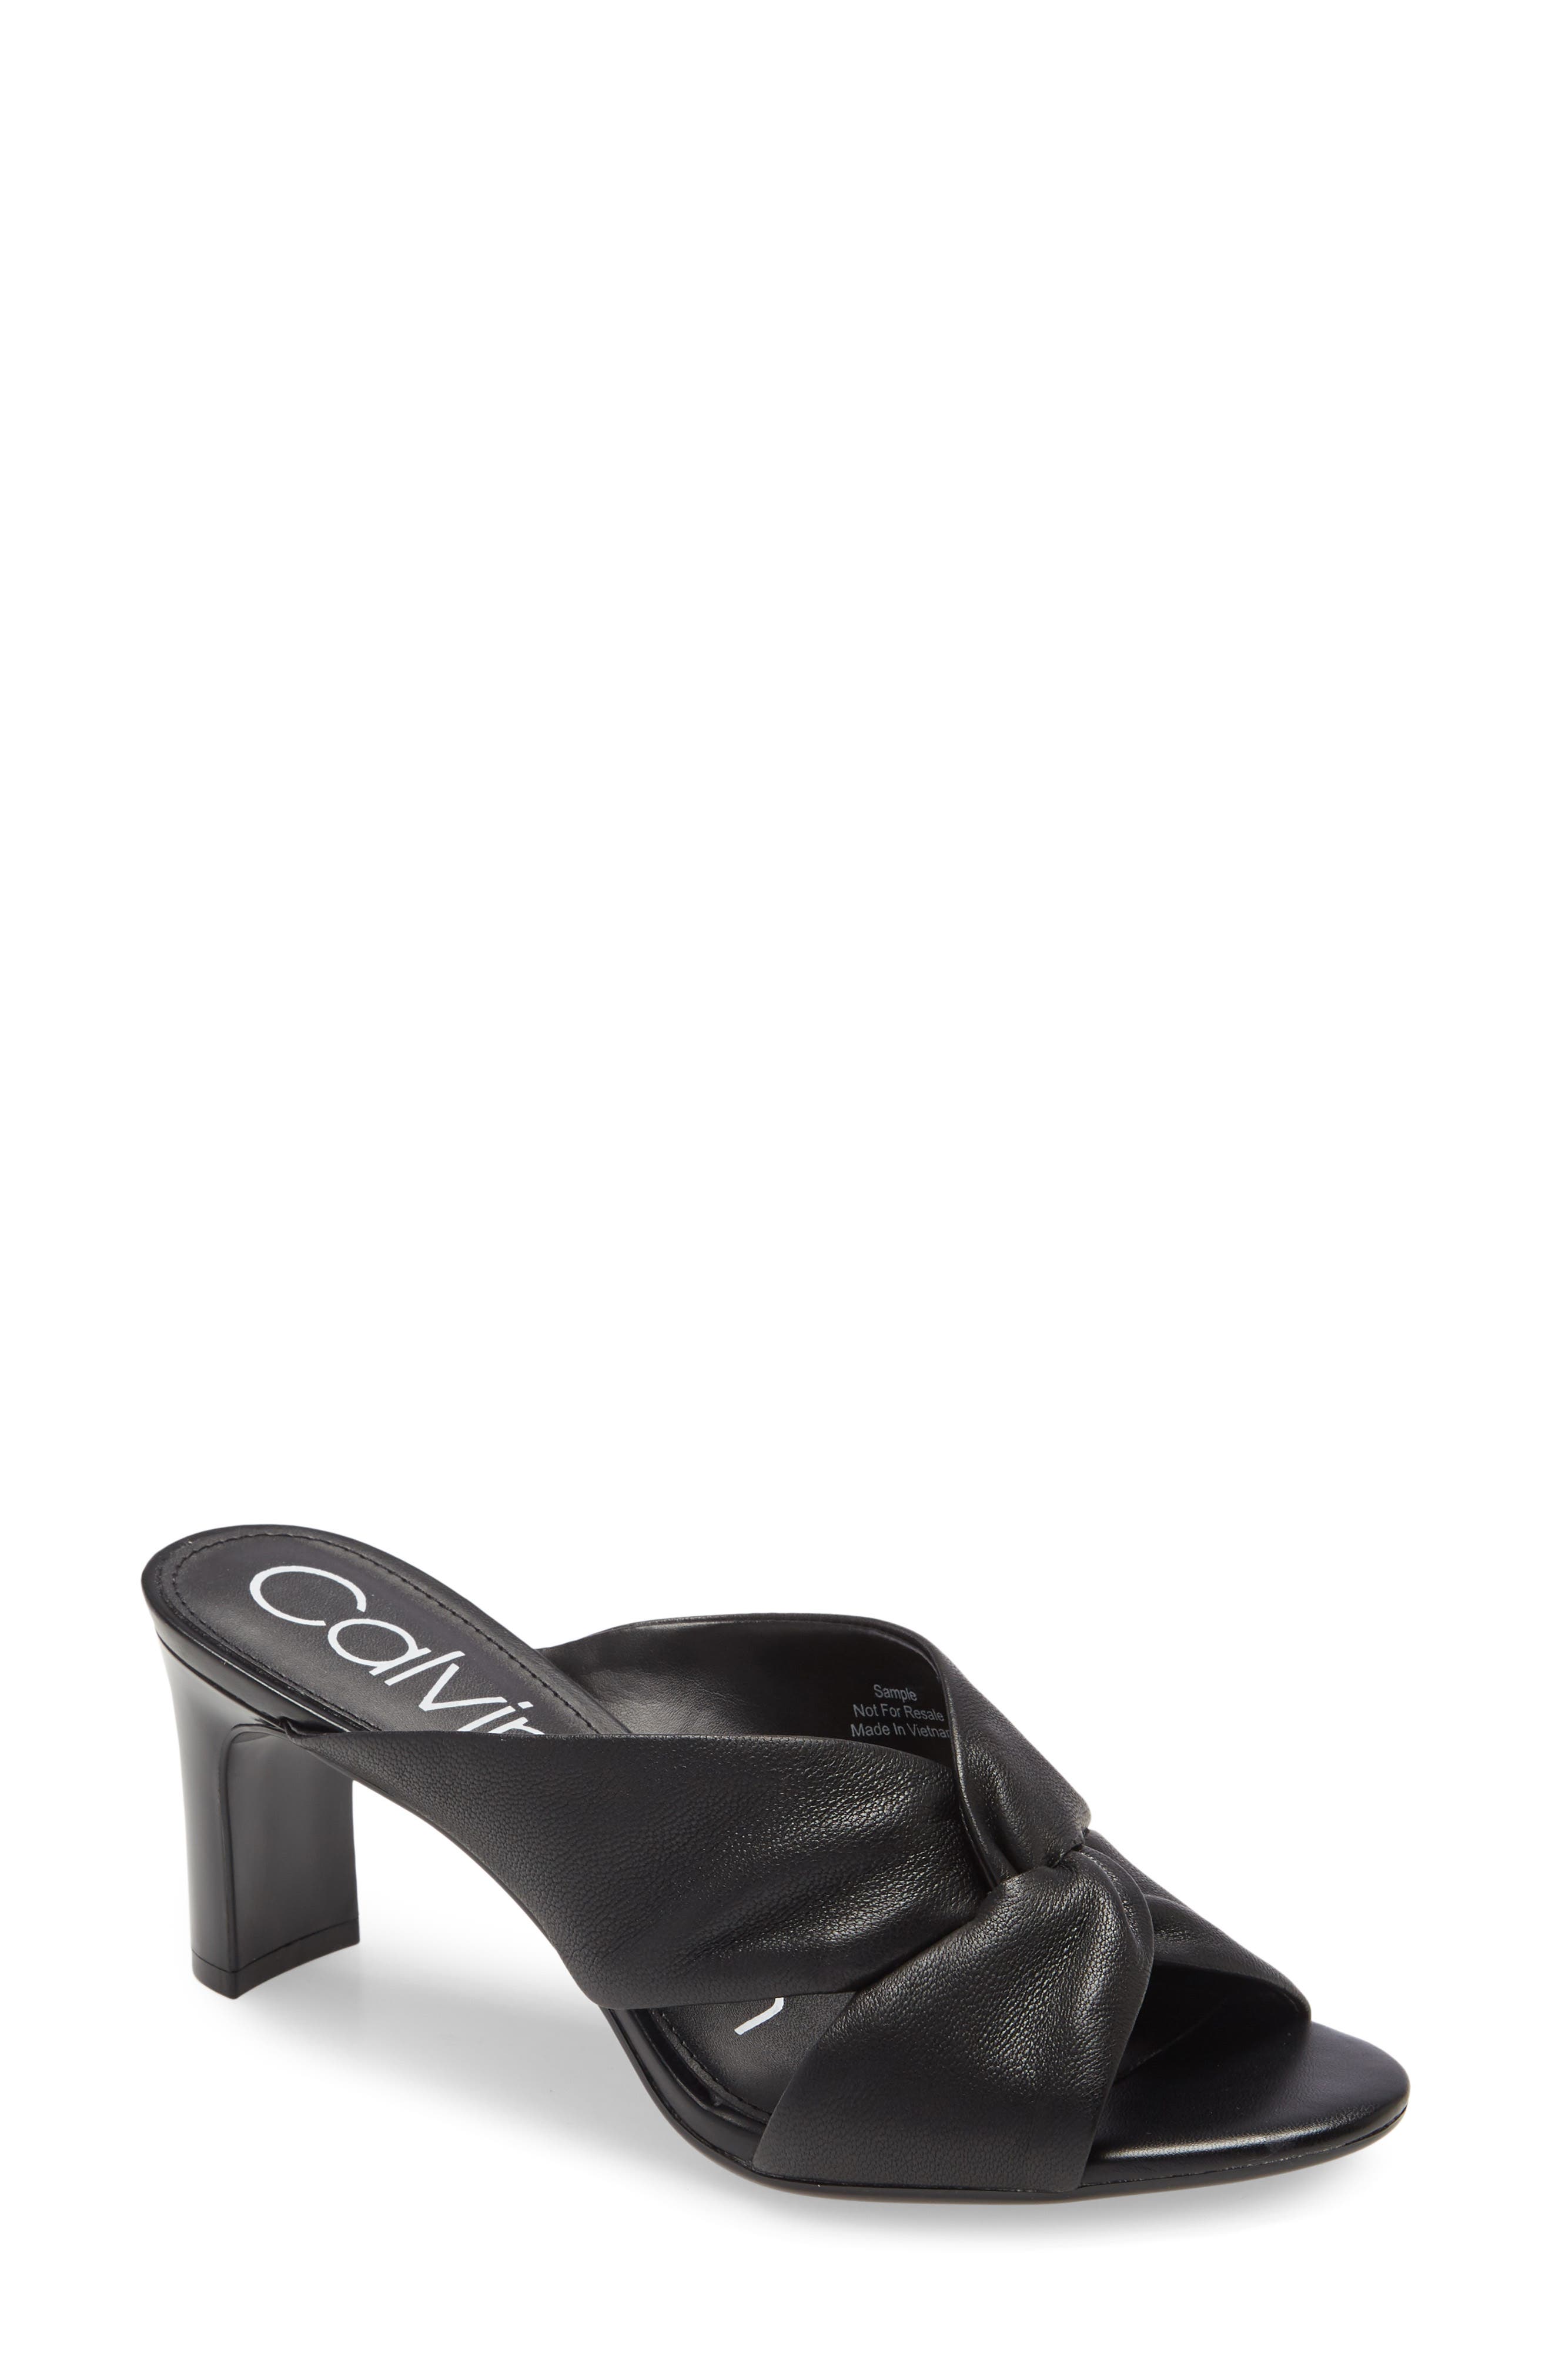 UPC 194060410517 product image for Women's Calvin Klein Omarion Sandal, Size 5.5 M - Black | upcitemdb.com